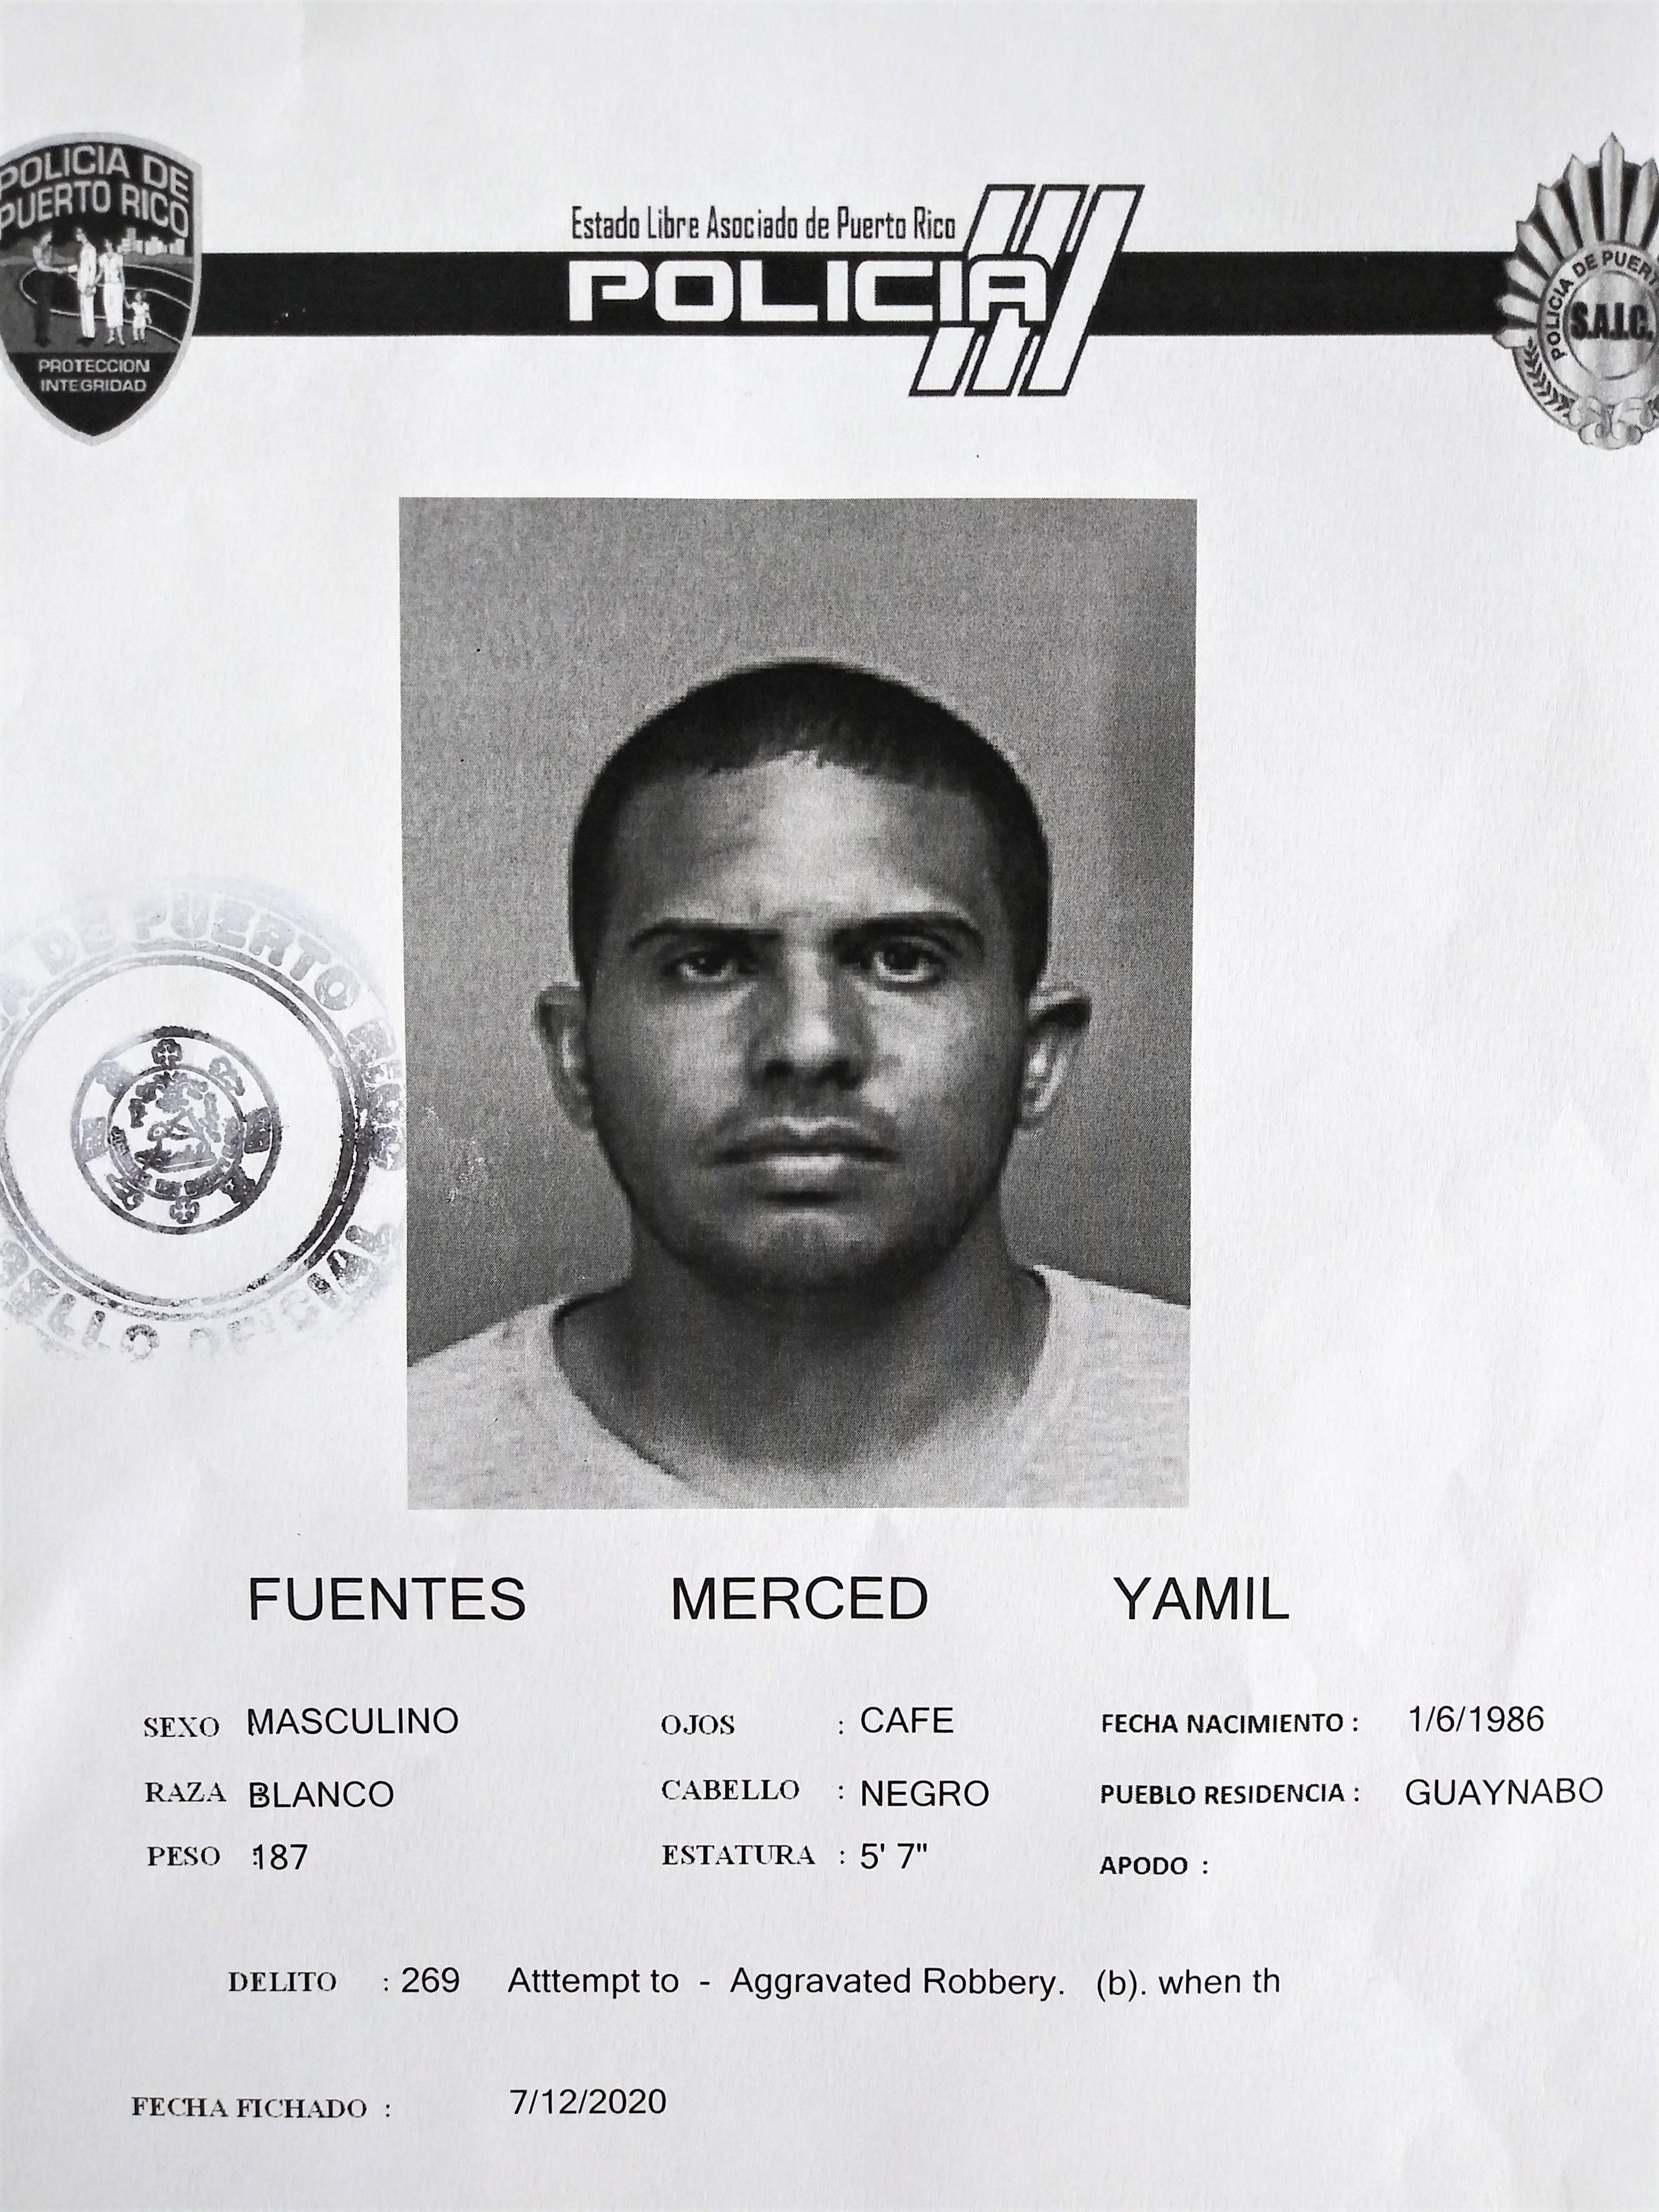 Yamiel Fuentes